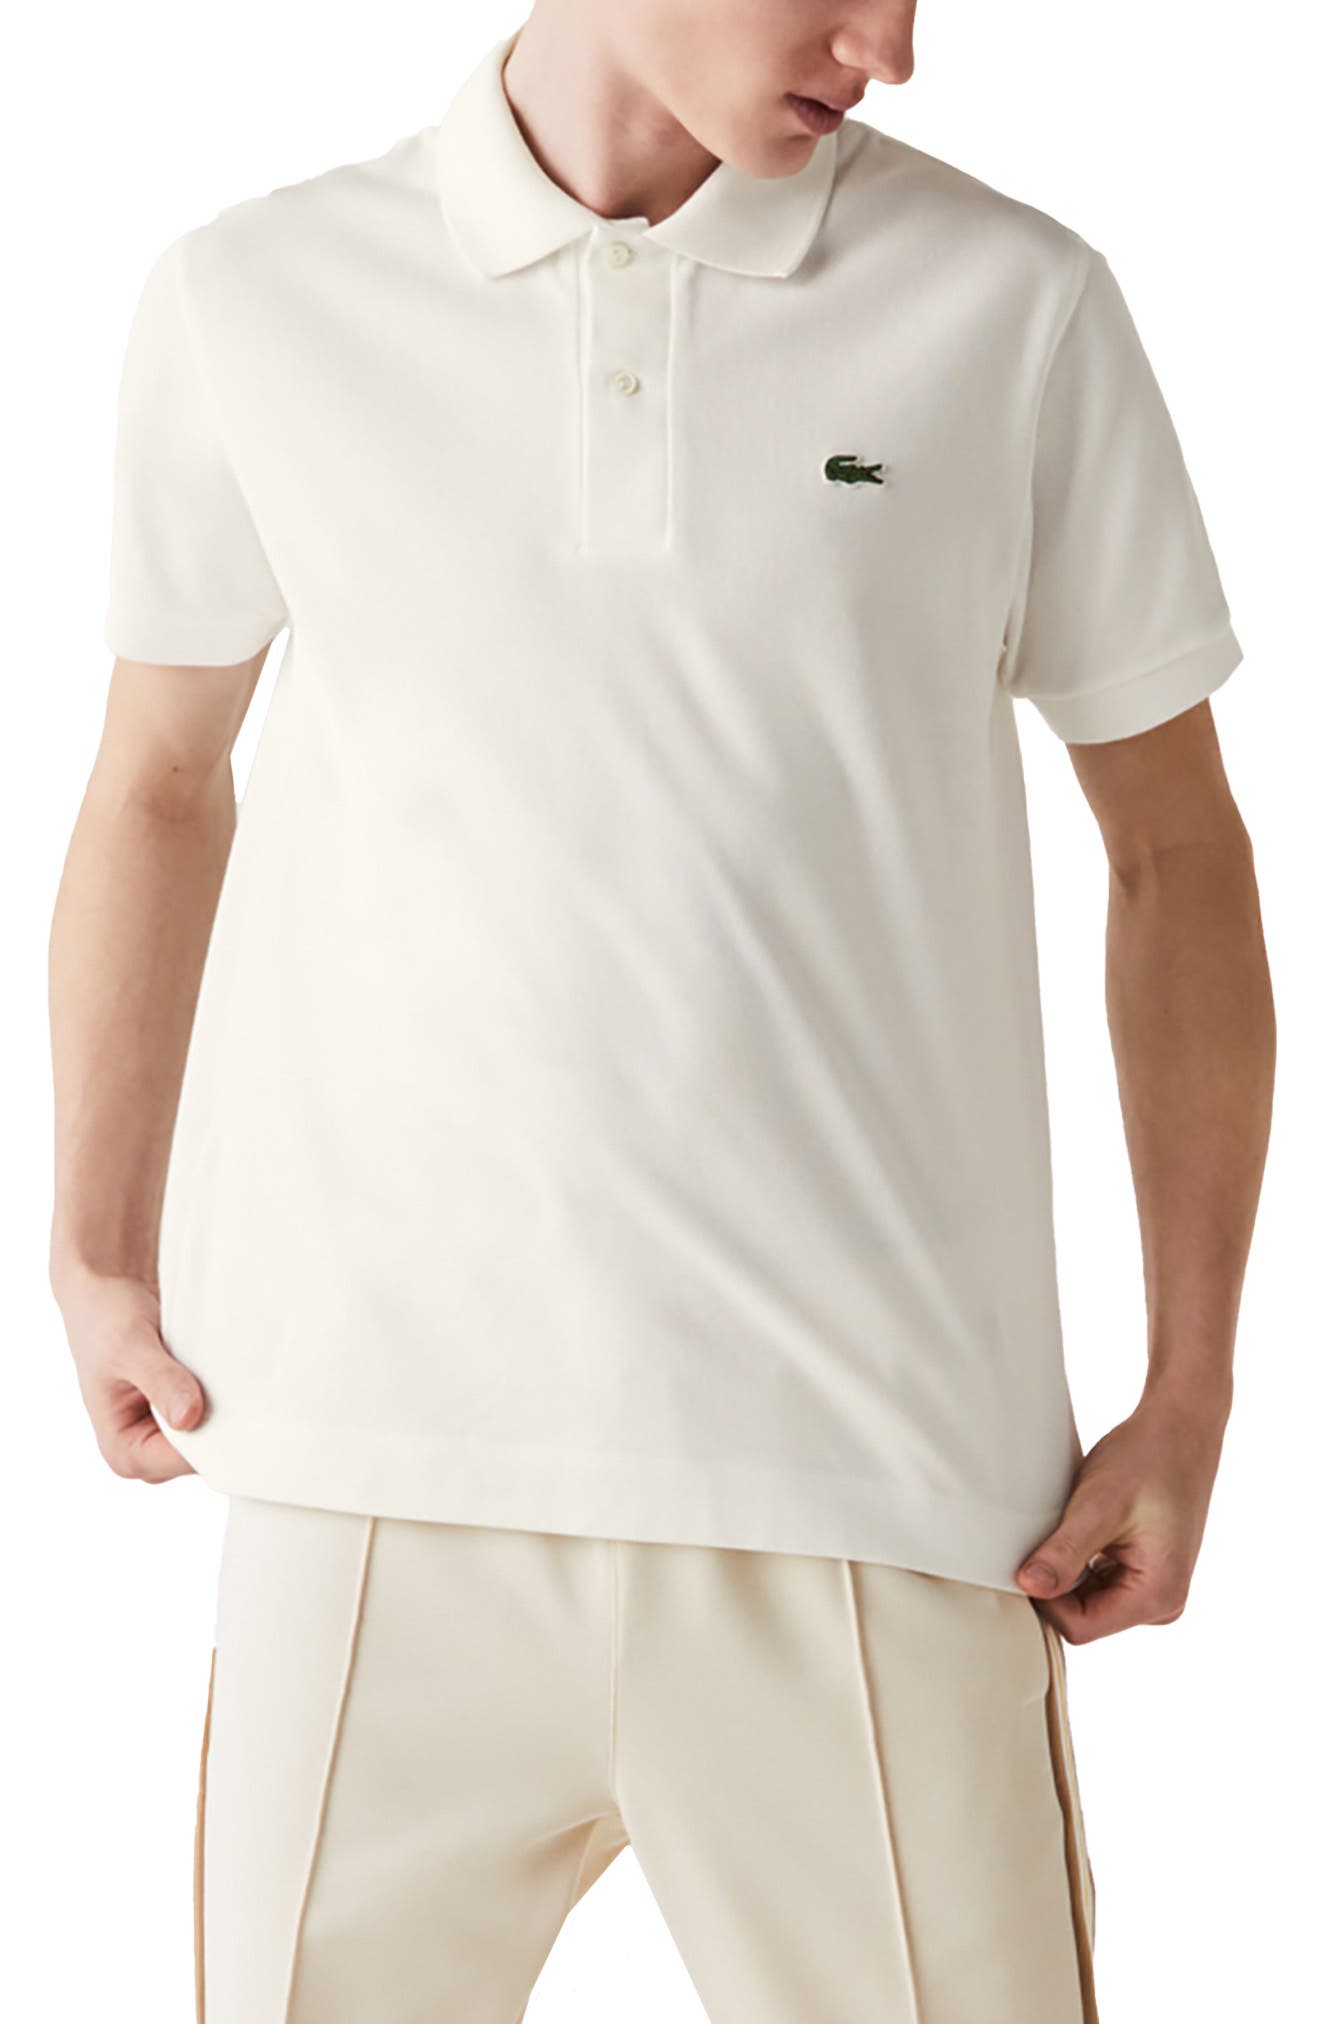 Lacoste T-shirt uk size 4XB BNWT ref # box 50 white big & tall 